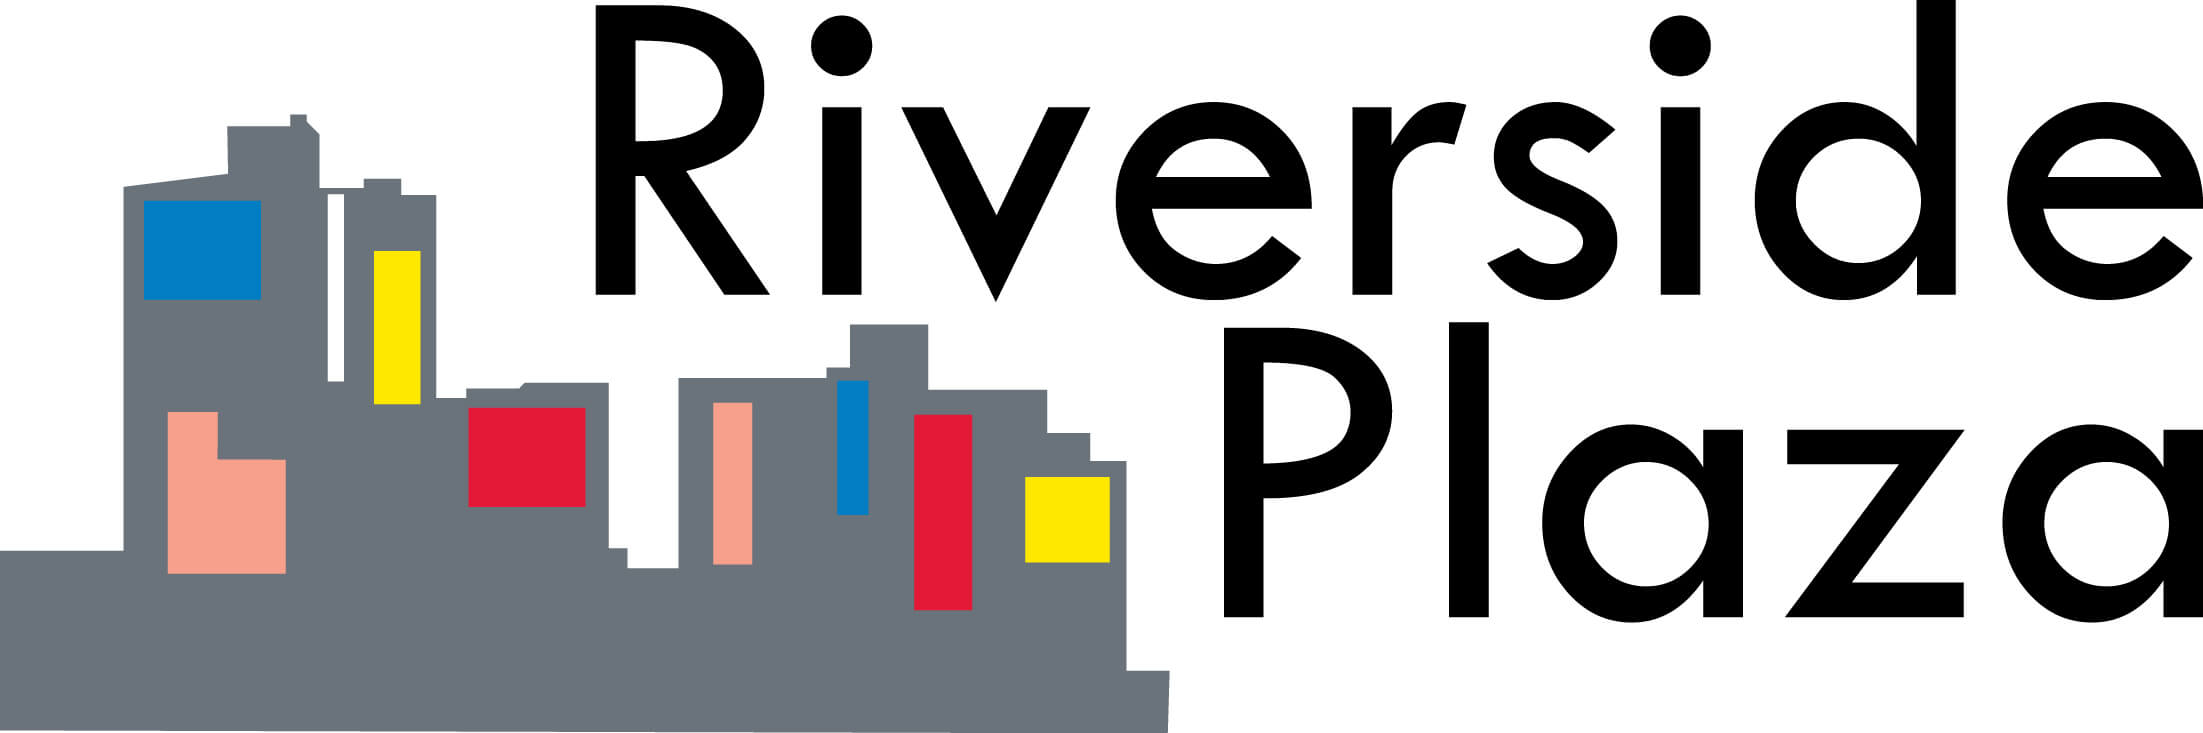 riverside plaza logo